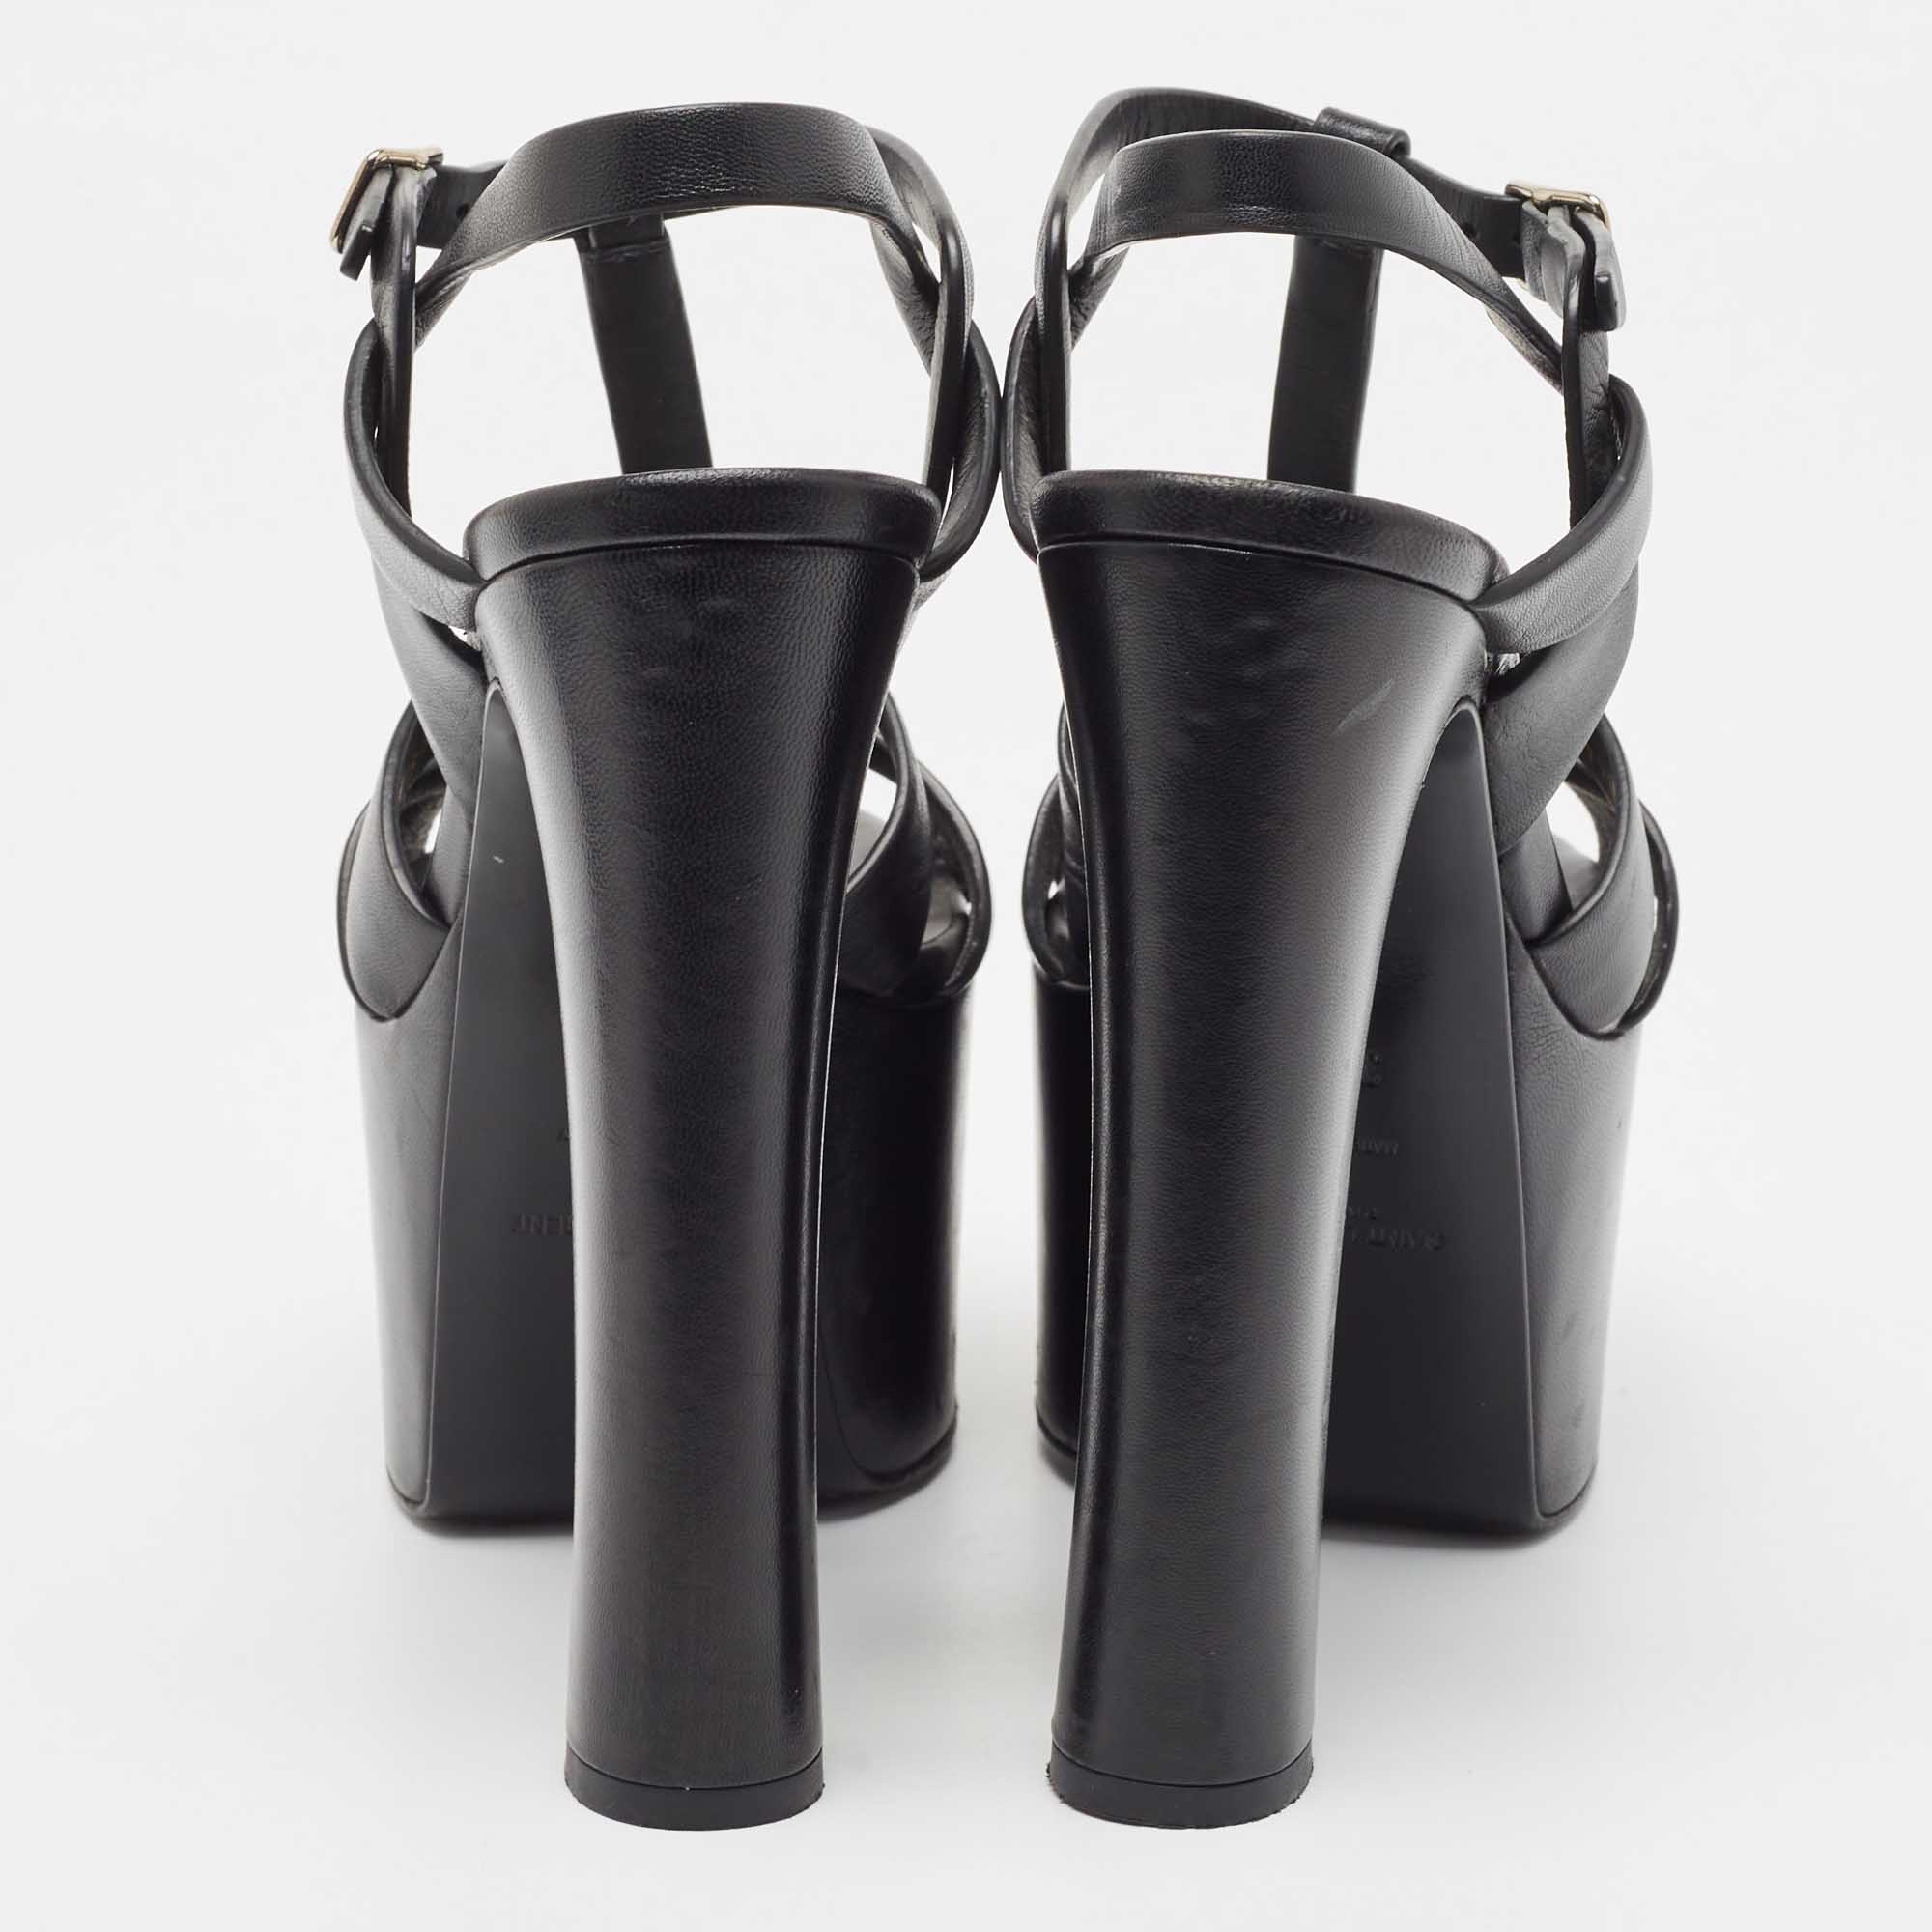 Saint Laurent Black Leather Platform Block Heel Ankle Strap Tribute Sandals Size 38.5